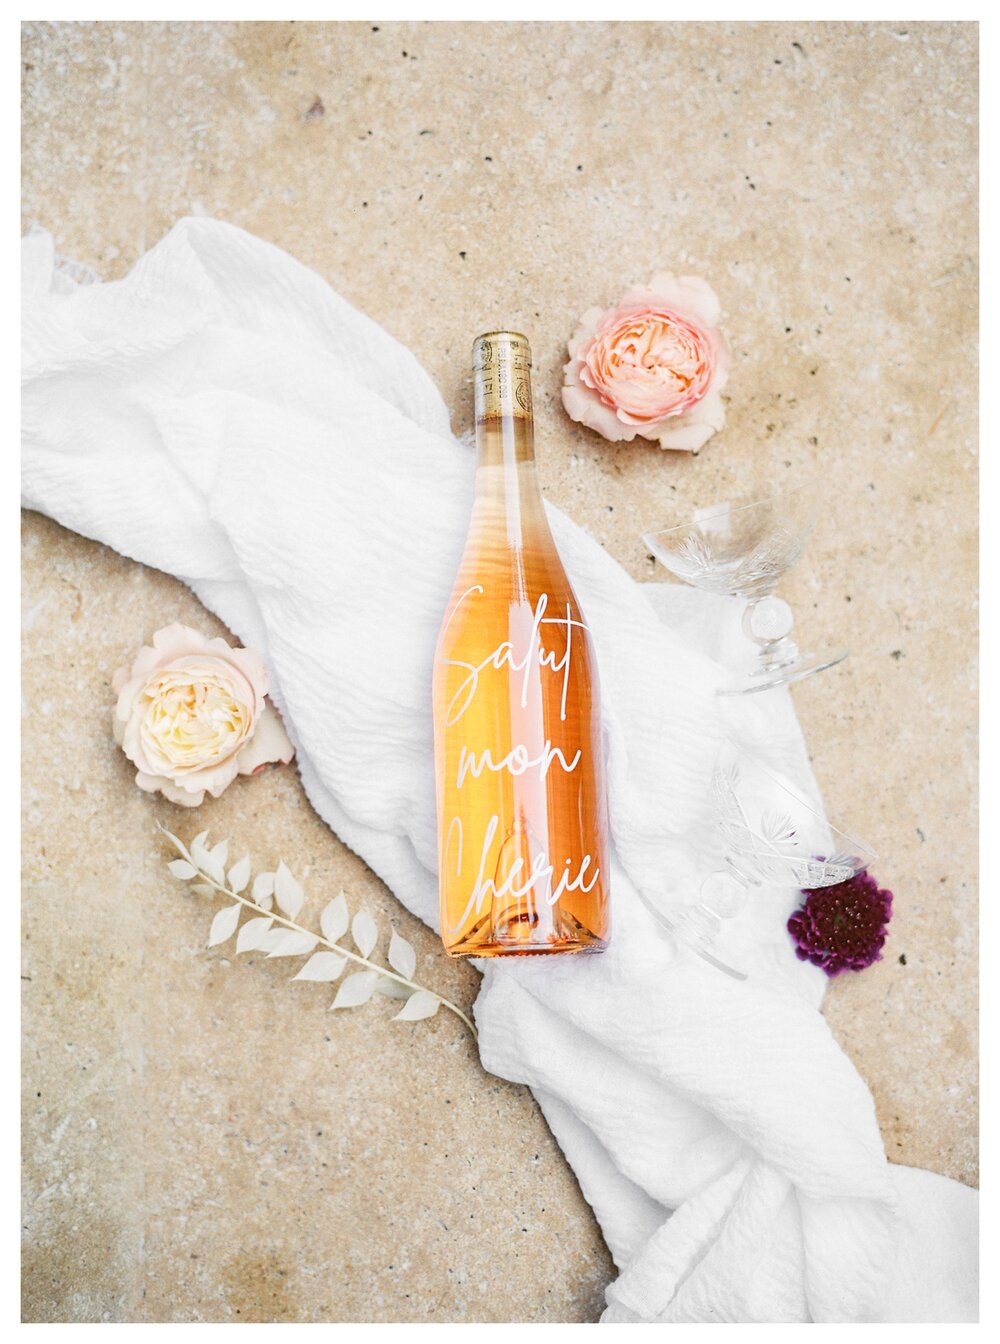  wedding details, personalized rose wine bottle 